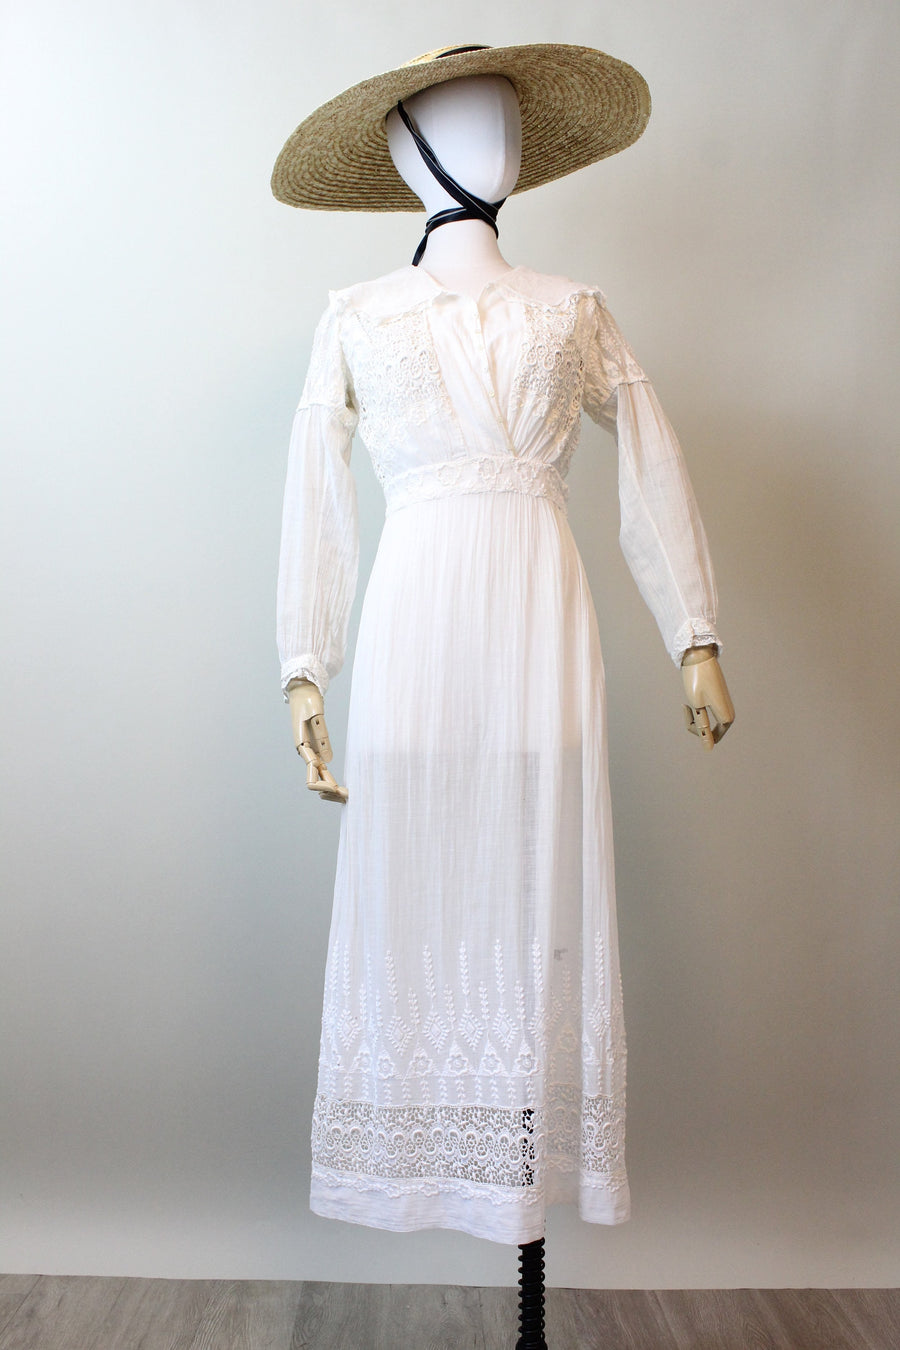 Antique Edwardian Lace Slip Dress 1910 20s White Linen Eyelet